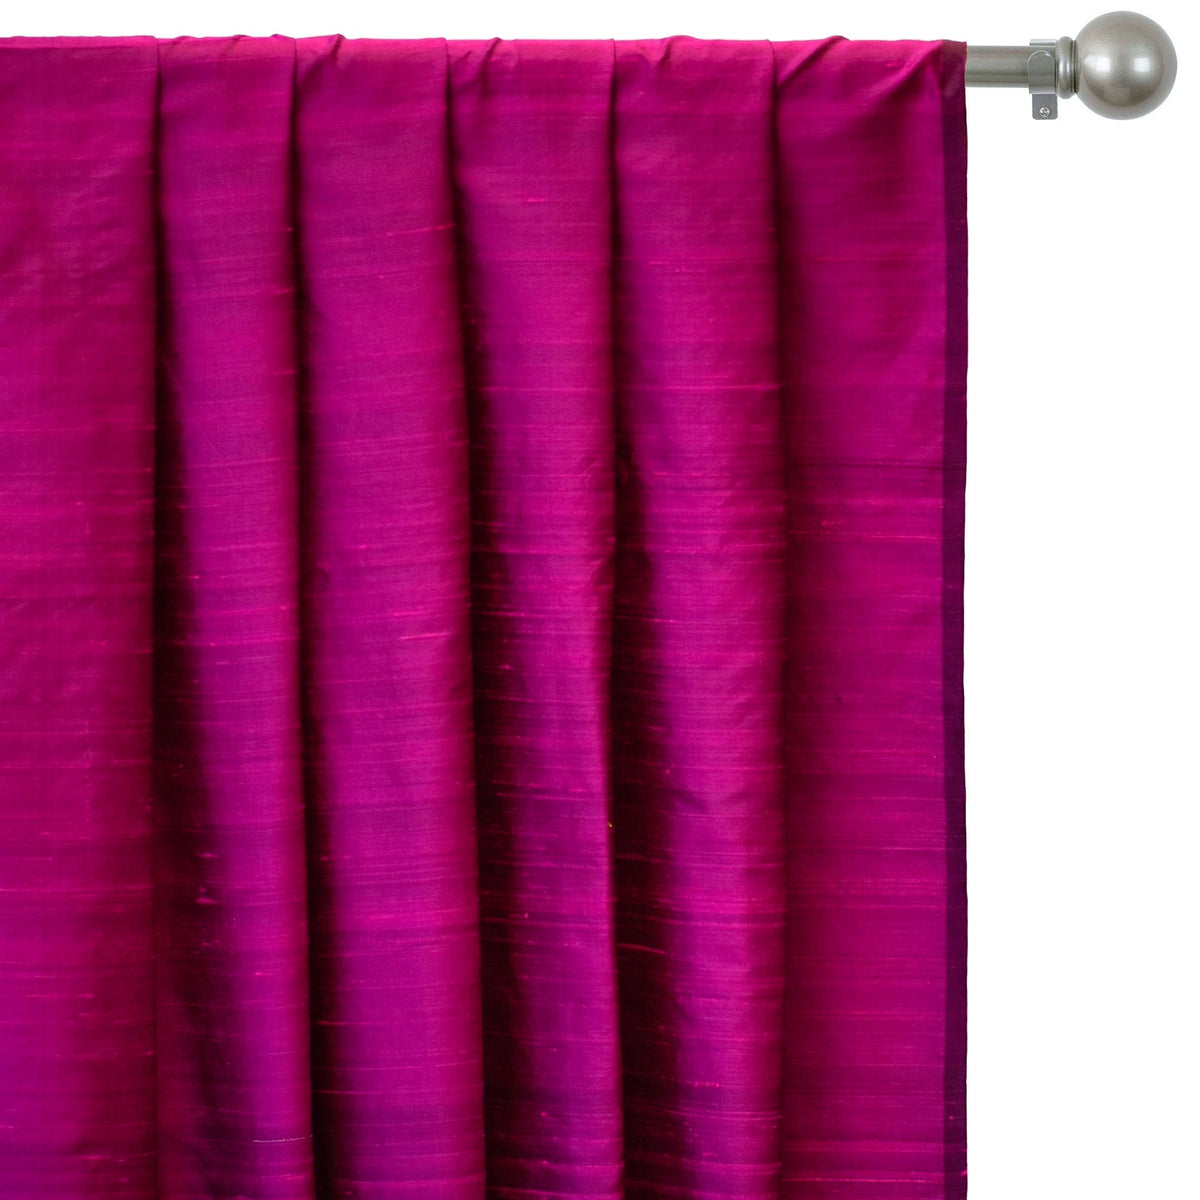 Fuchsia Pink String Curtain with Metallic Silver Threads, 3'W x 6.5'L